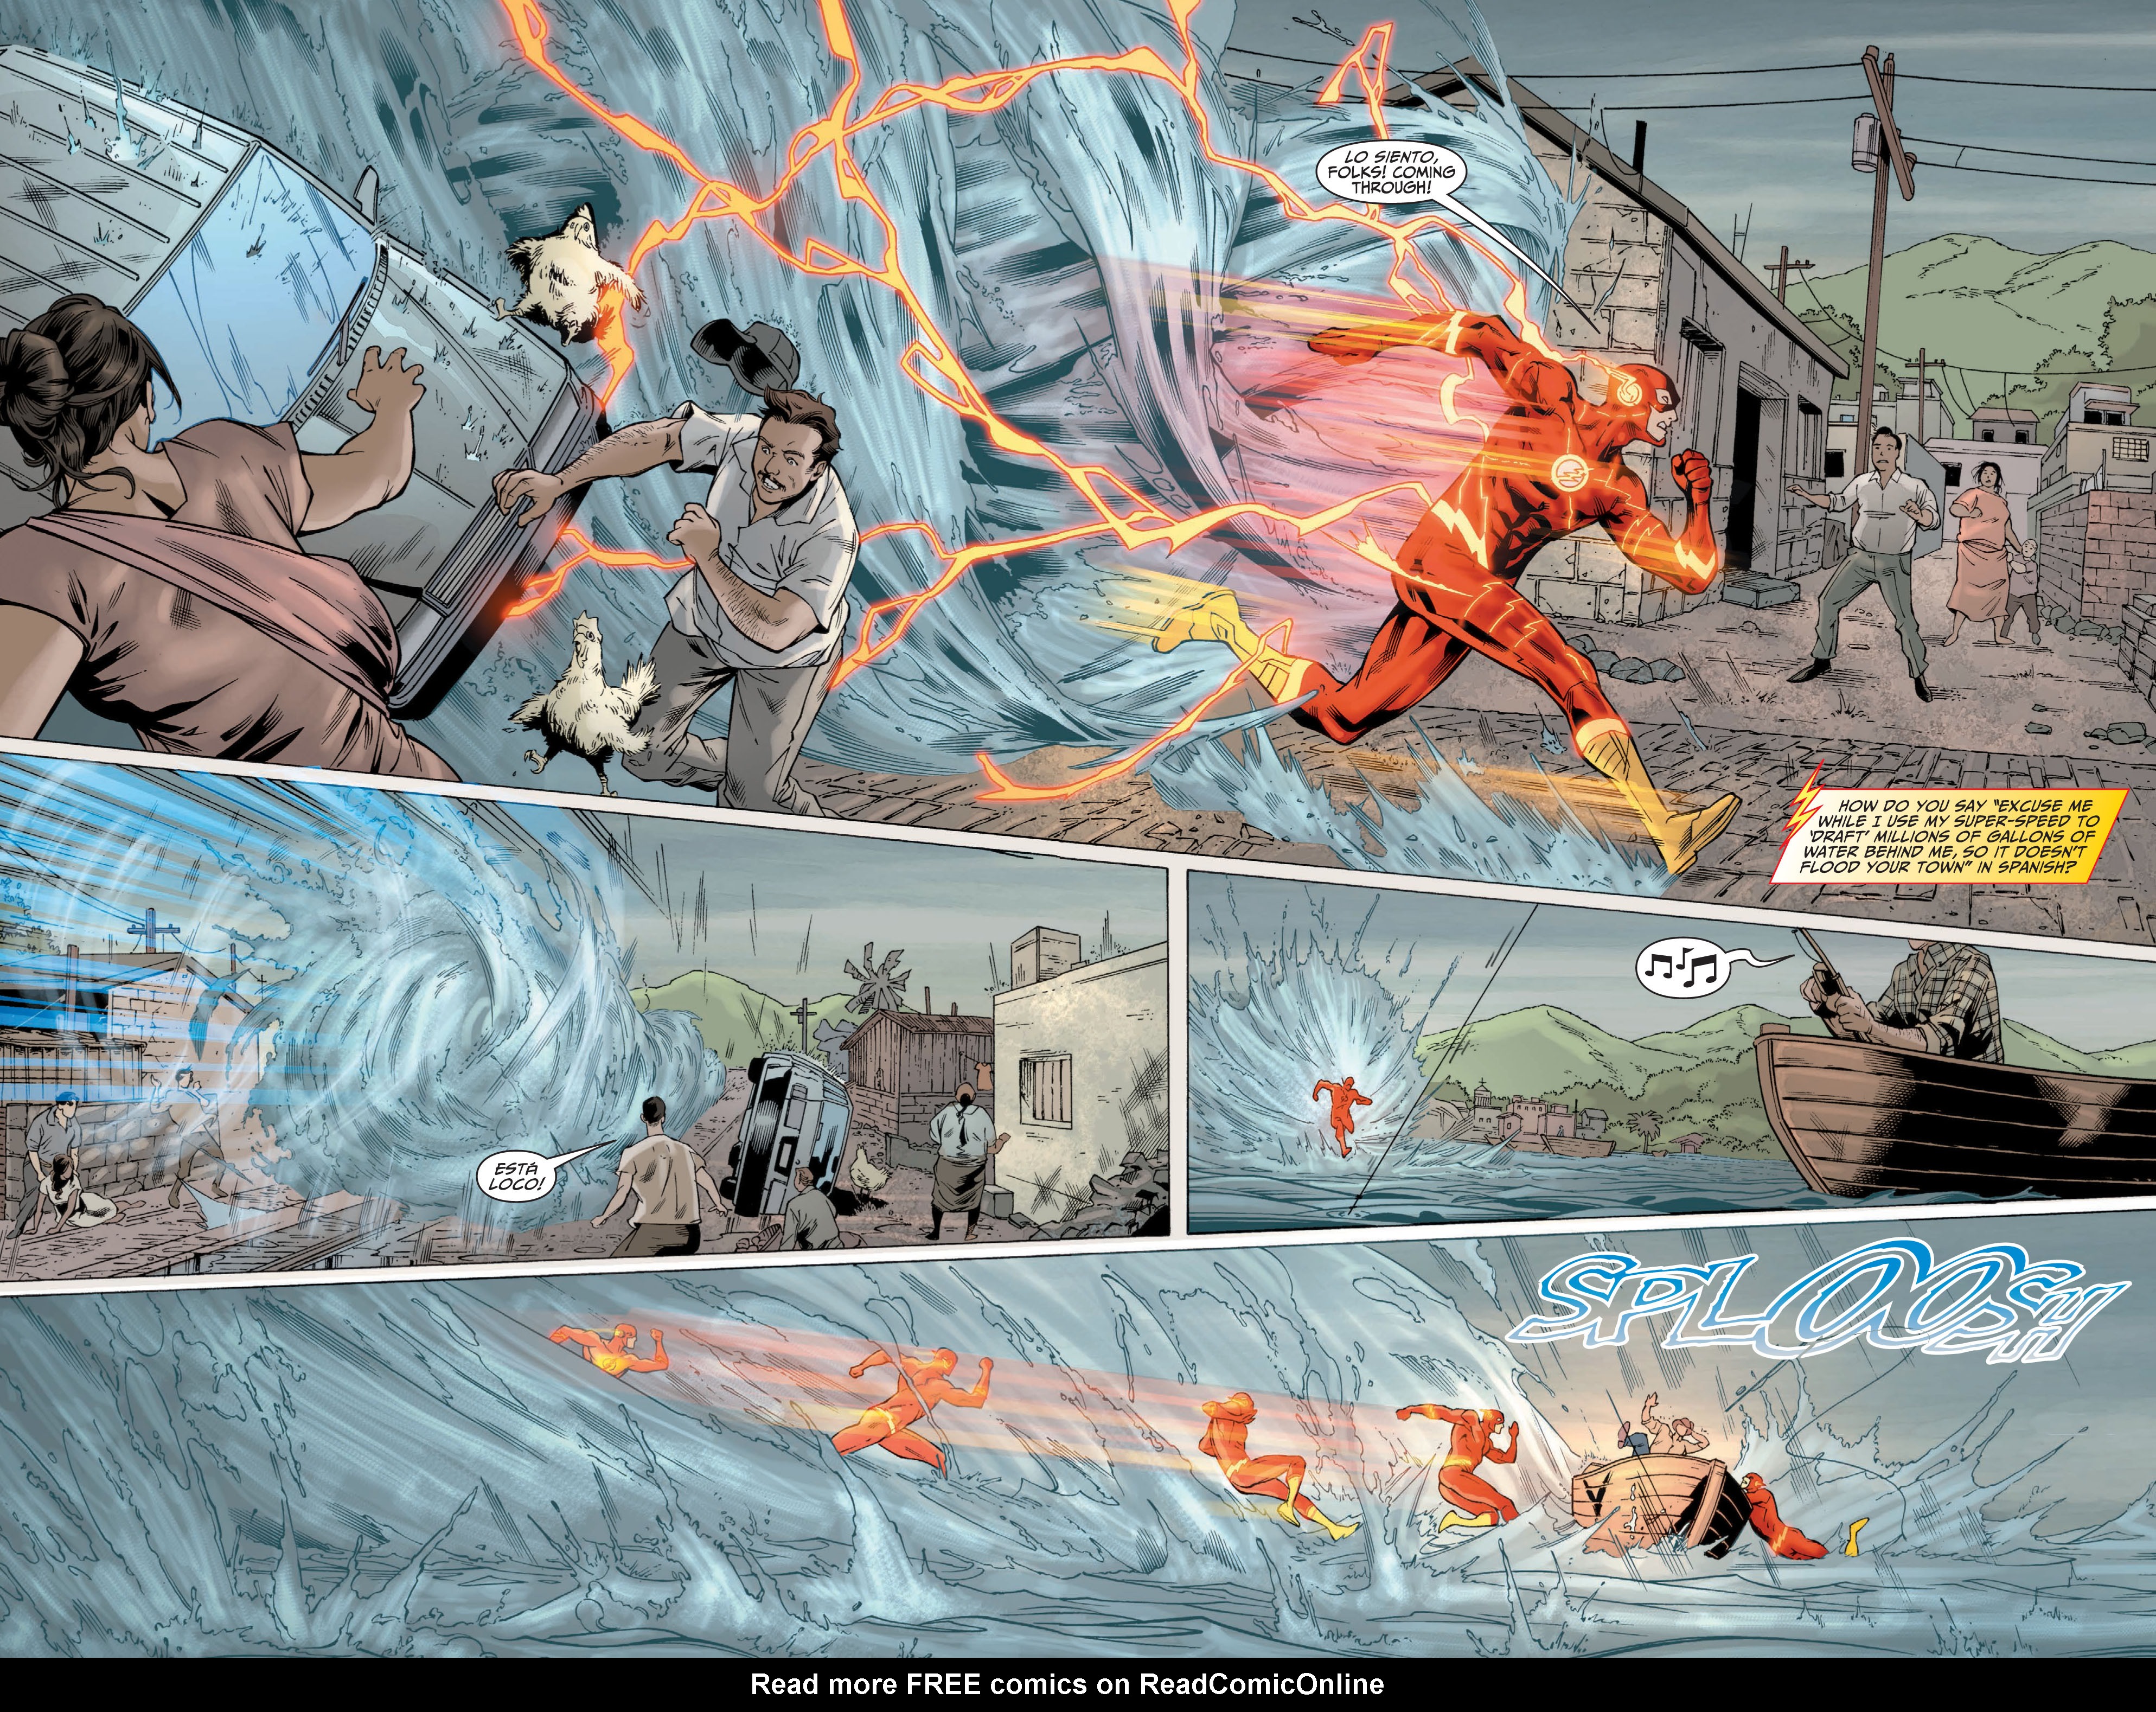 The Flash газета из будущего. The Flash New 52 Issue 36. New Ultimates 2011 комиксы. Следующее лето комикс